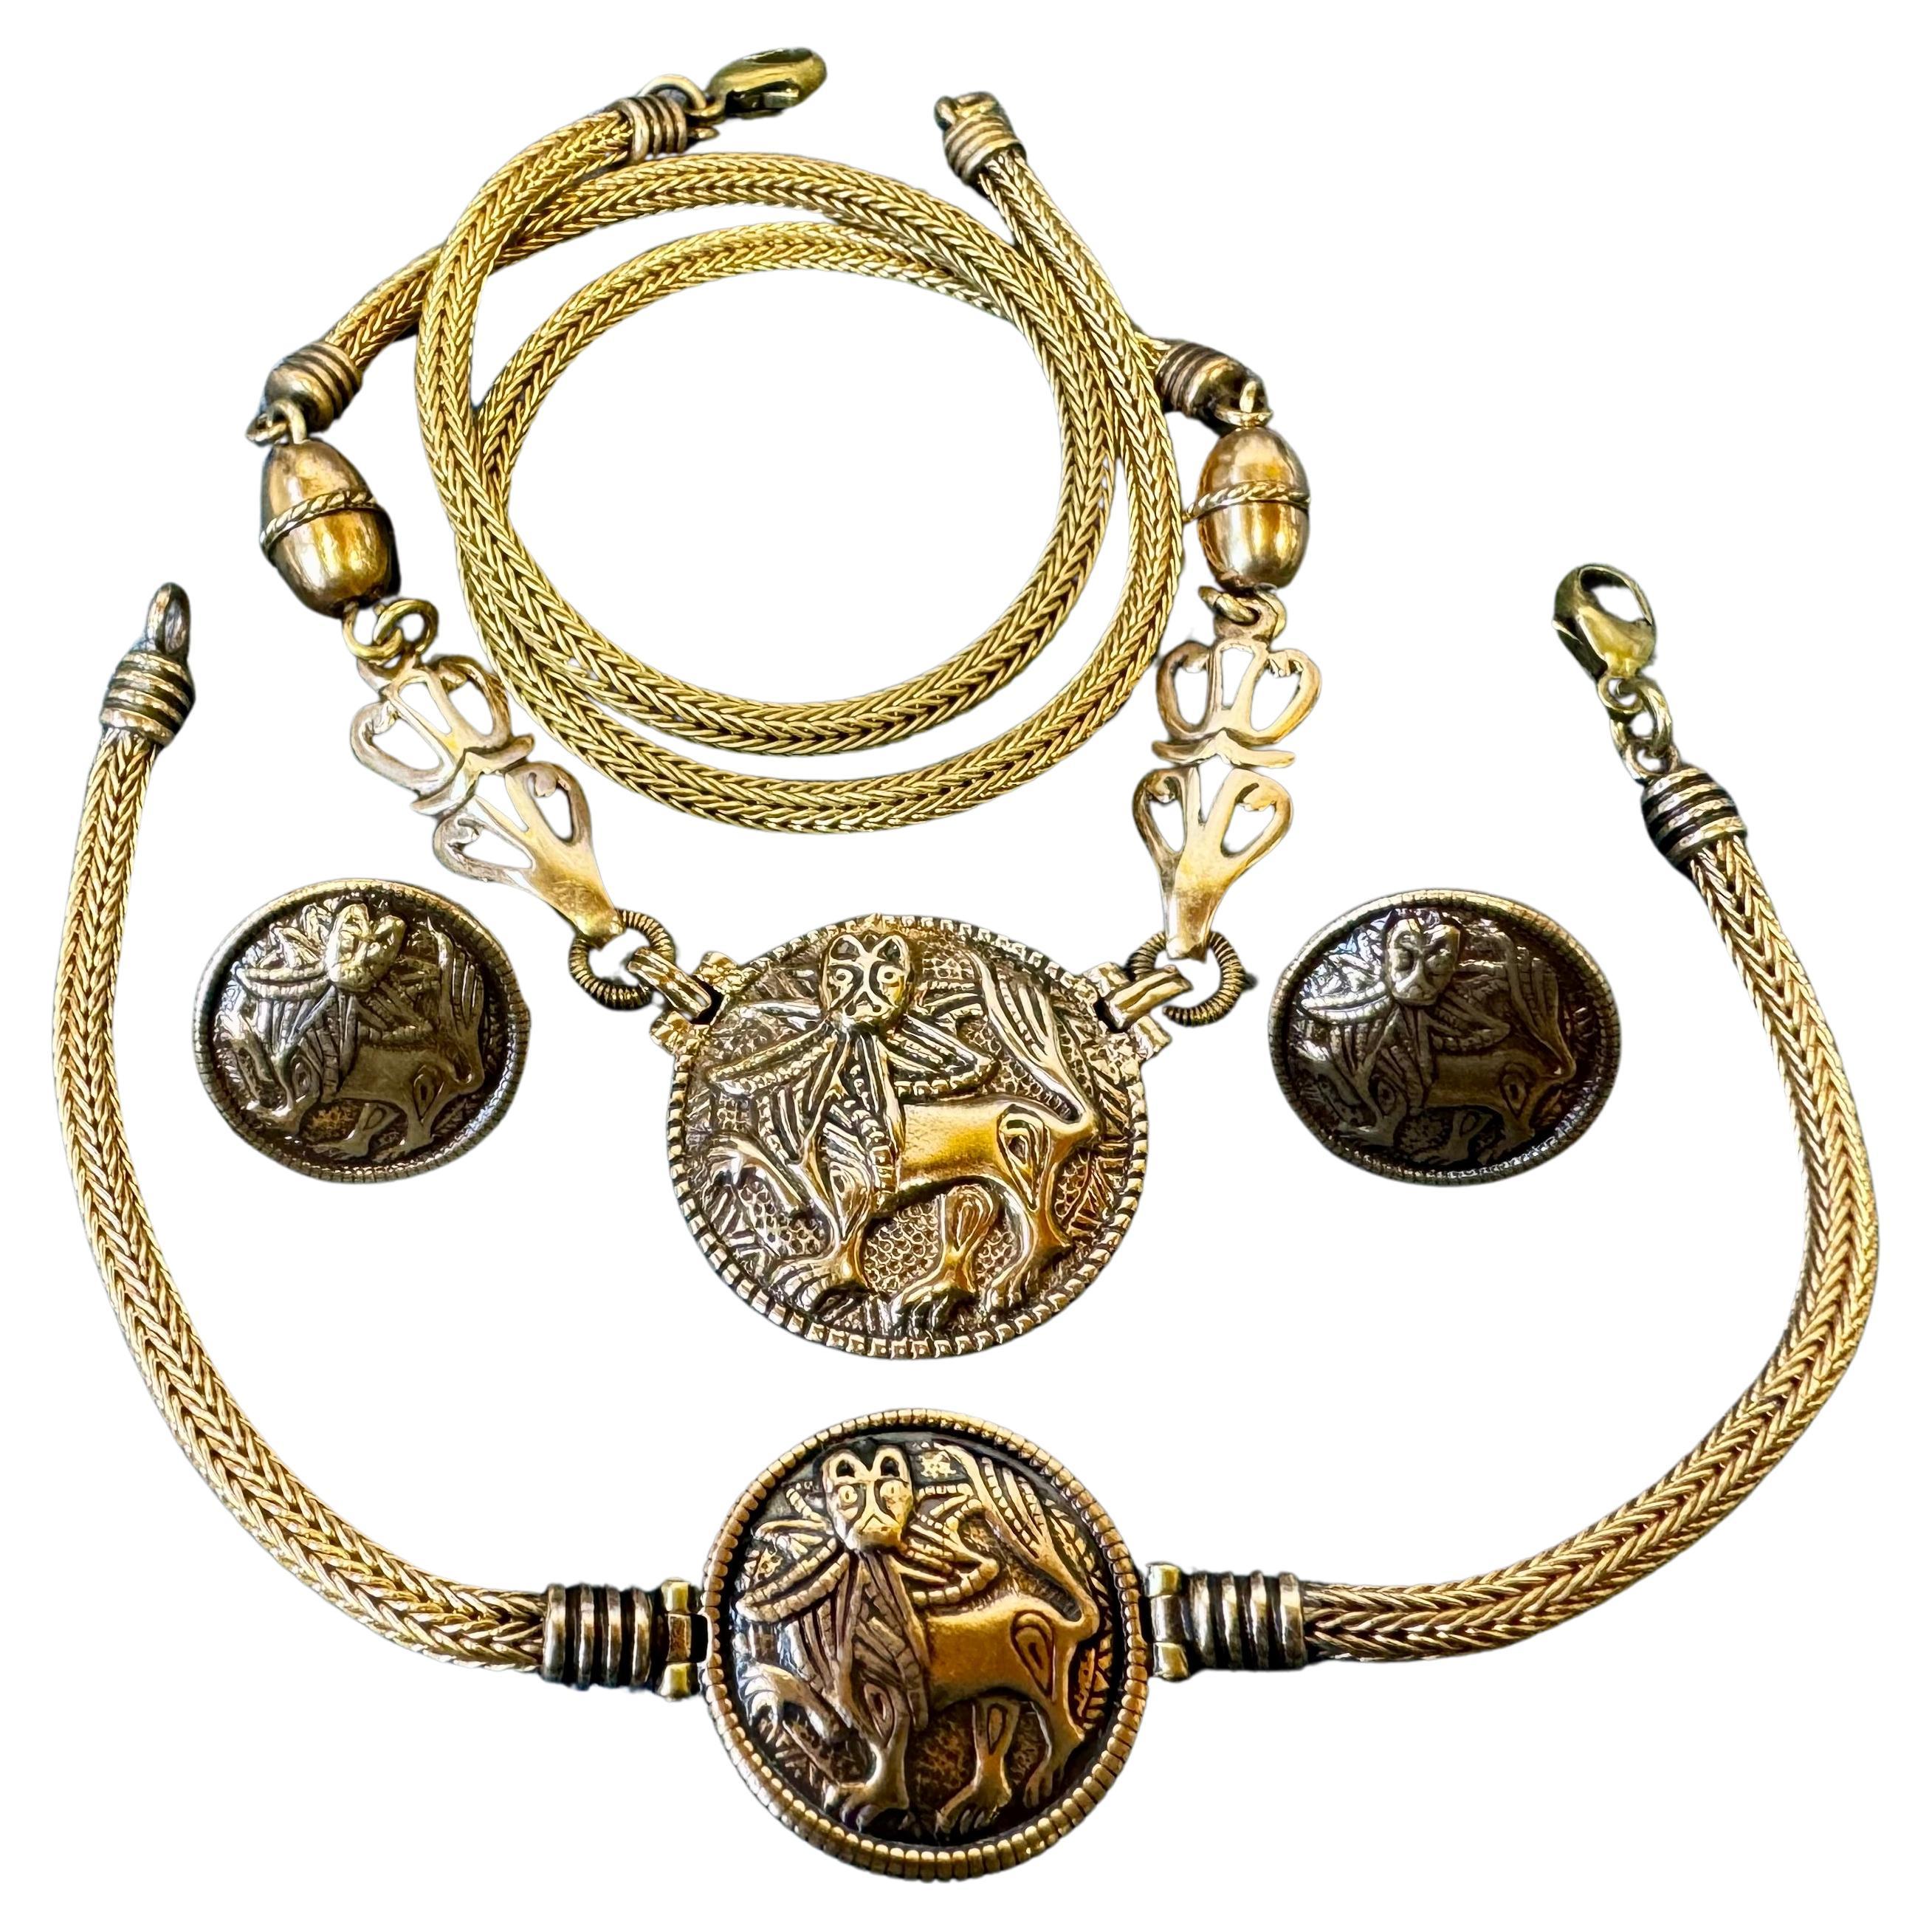 Kalevala Koru Sun Lion Necklace, Bracelet and Earrings. Finland